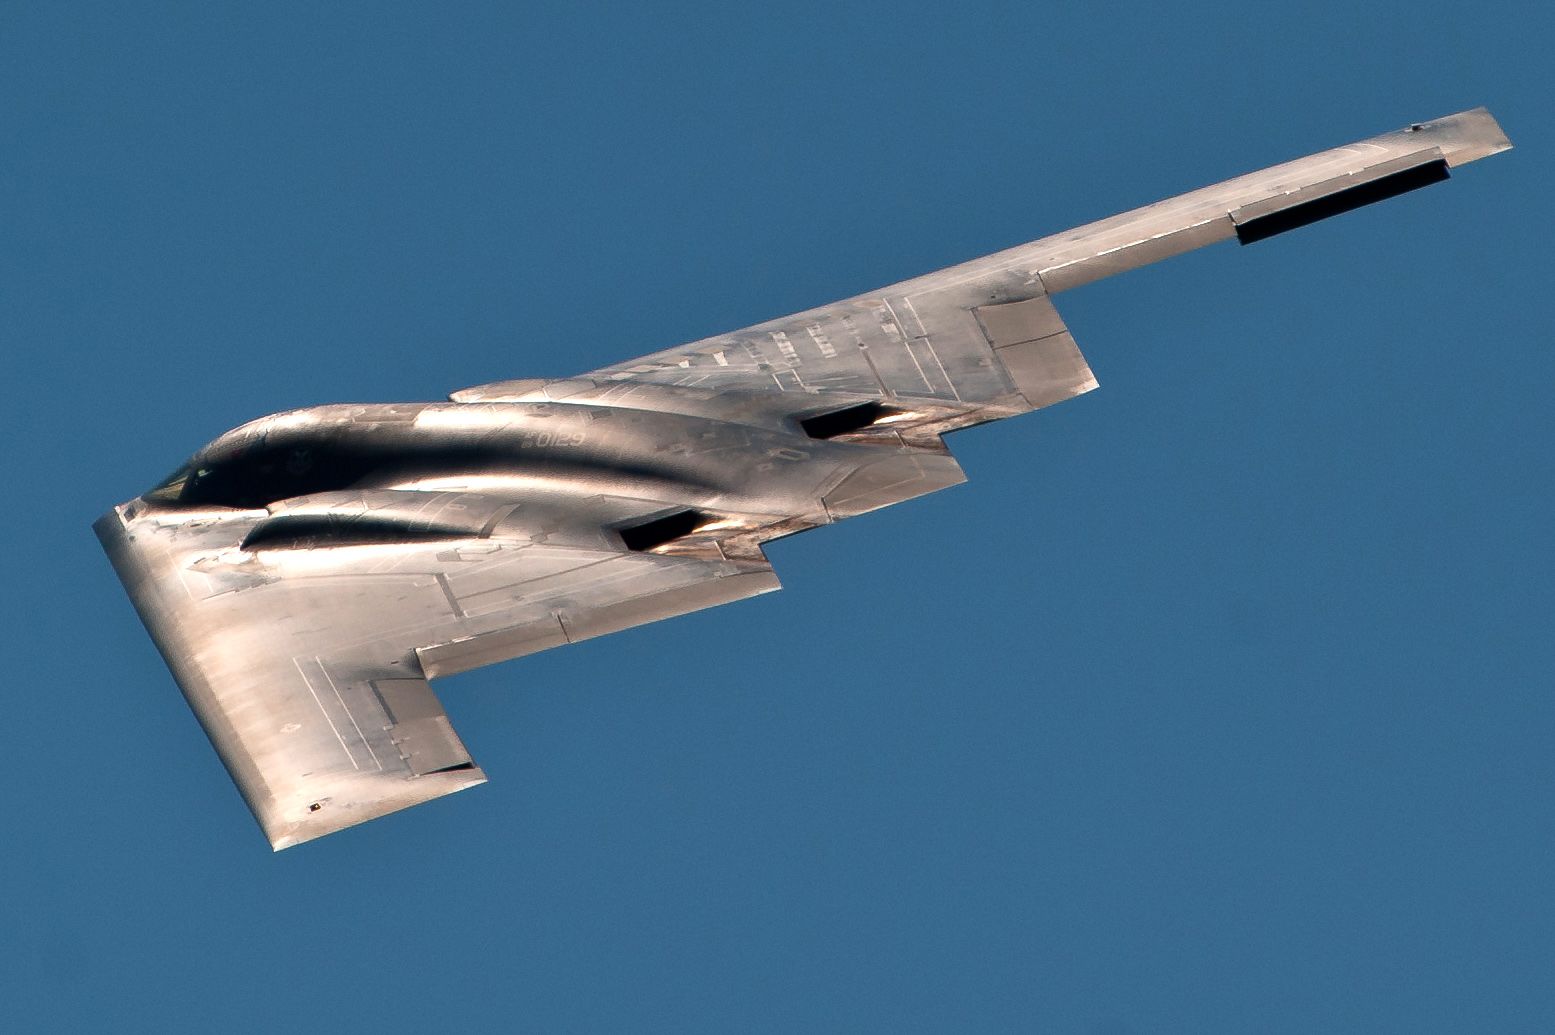 B-2 Spirit: The $2 billion flying wing